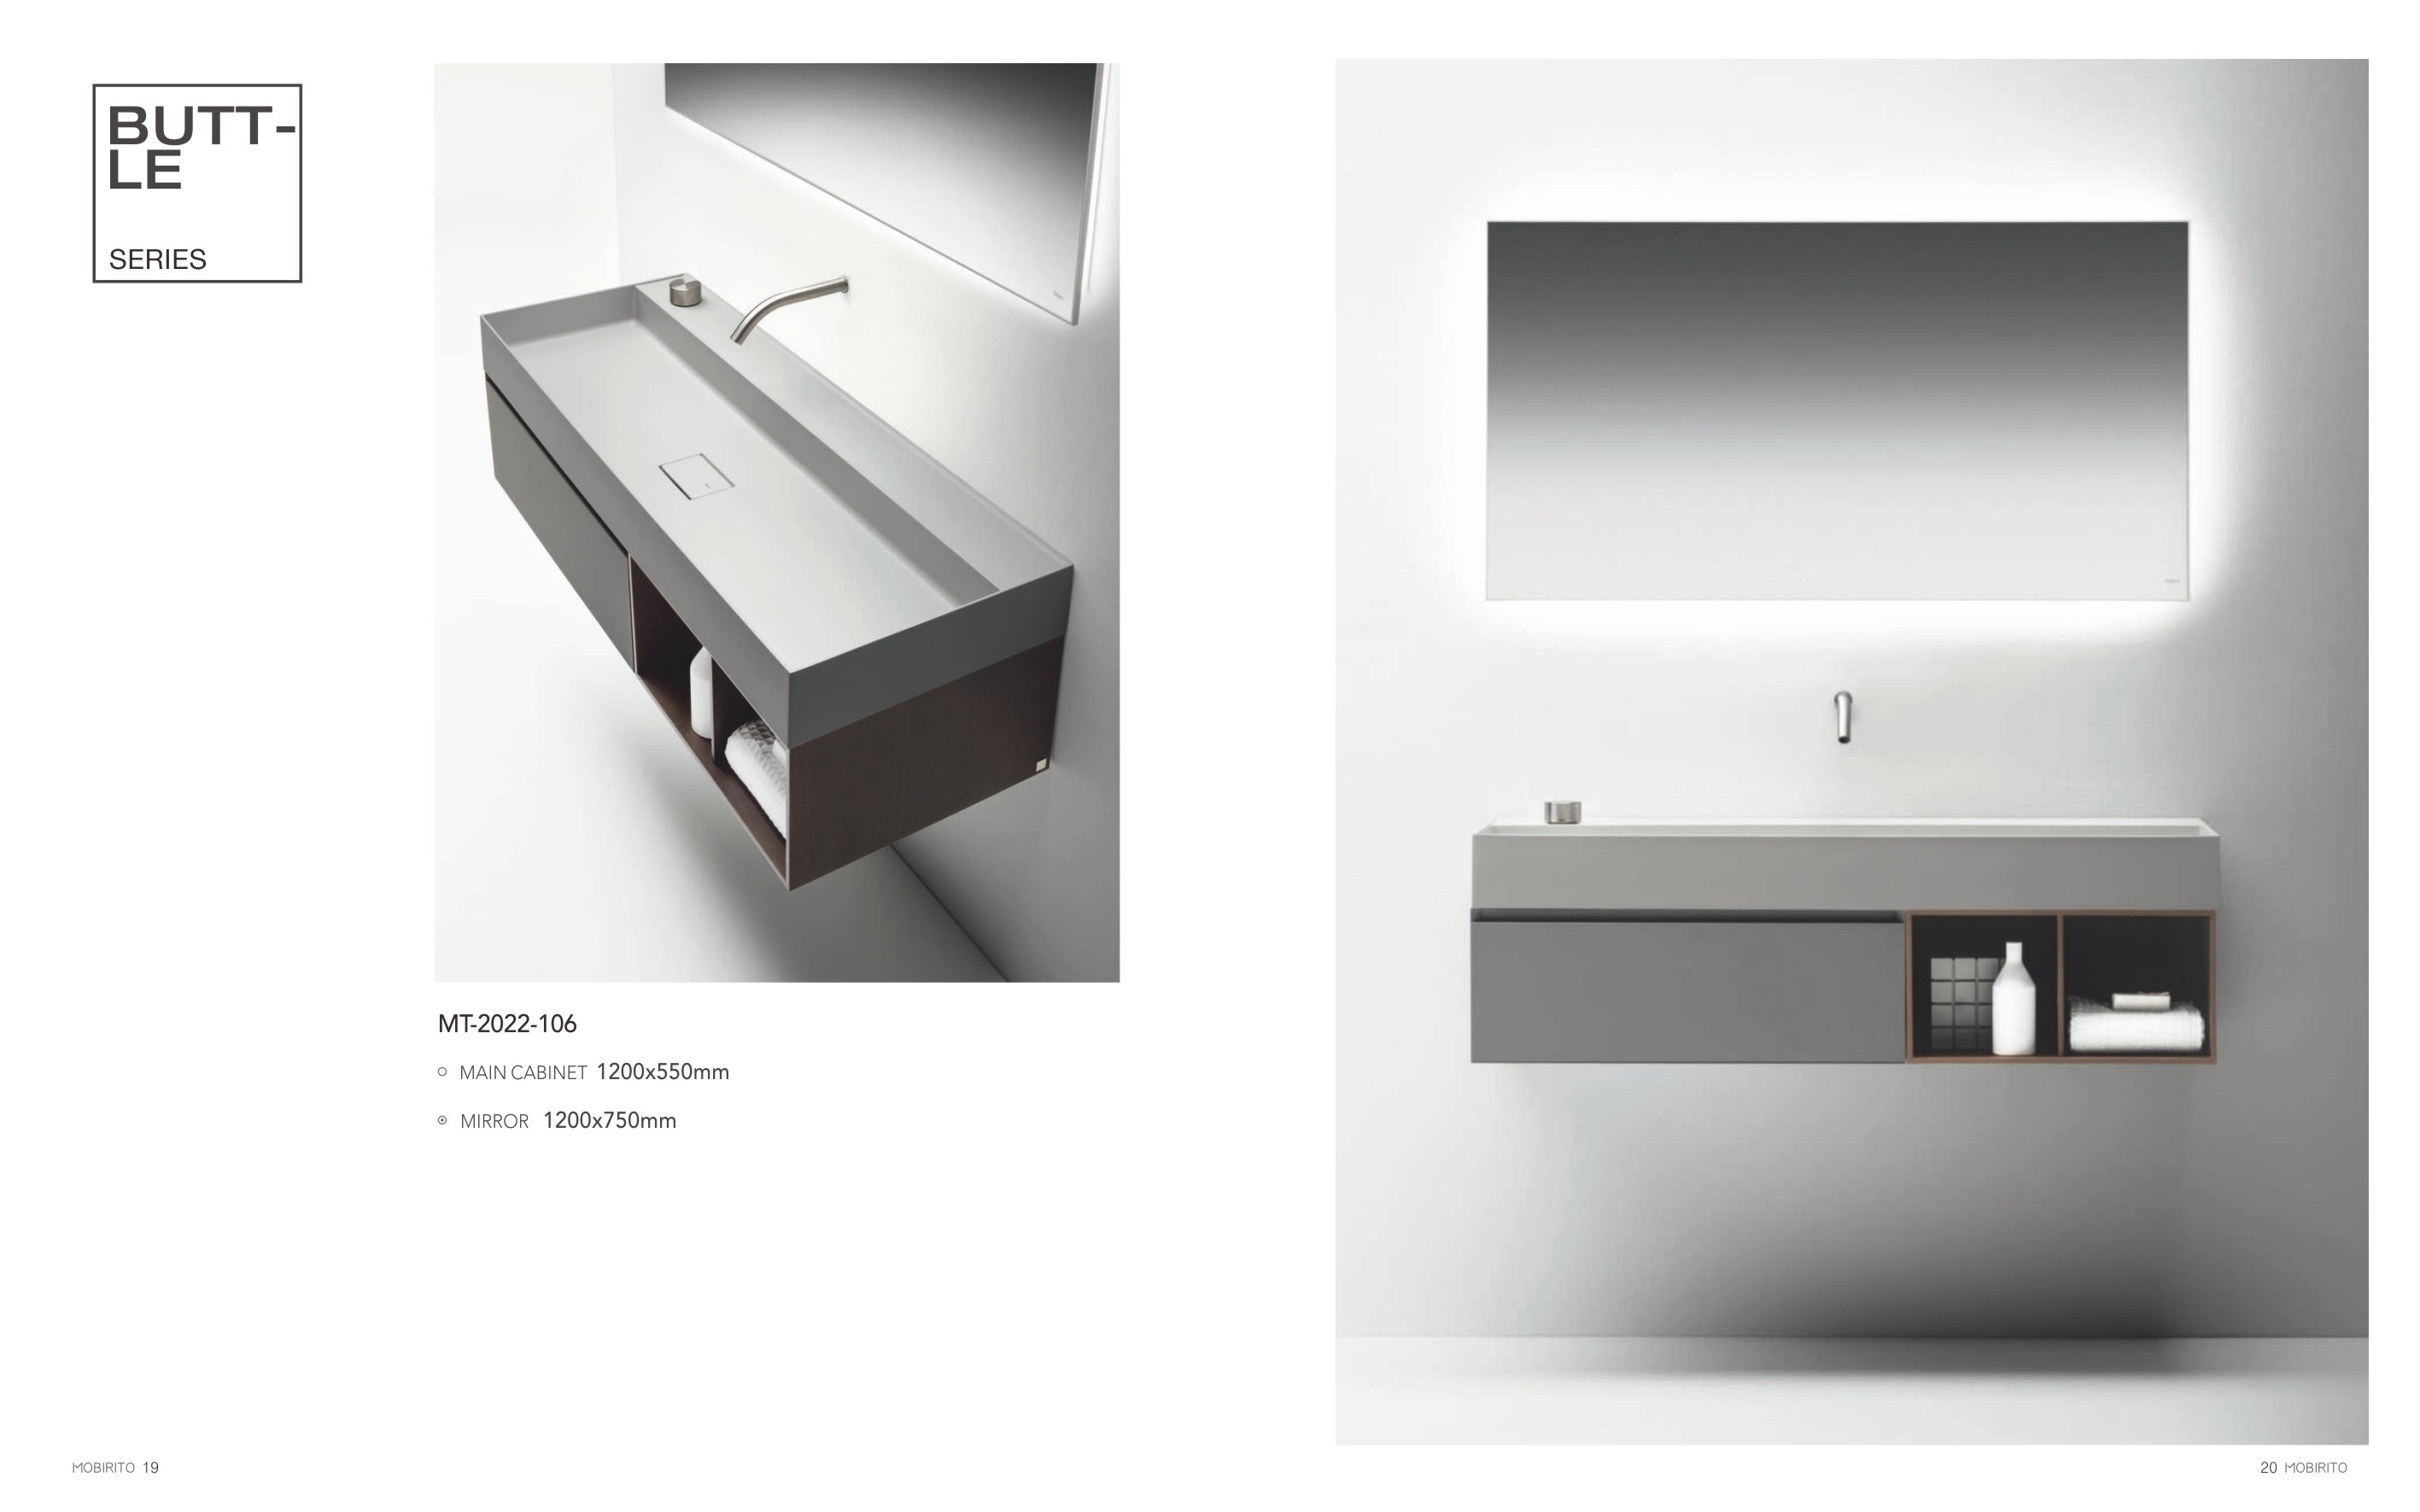 One-piece table basin Bathroom Cabinet MT2022-106